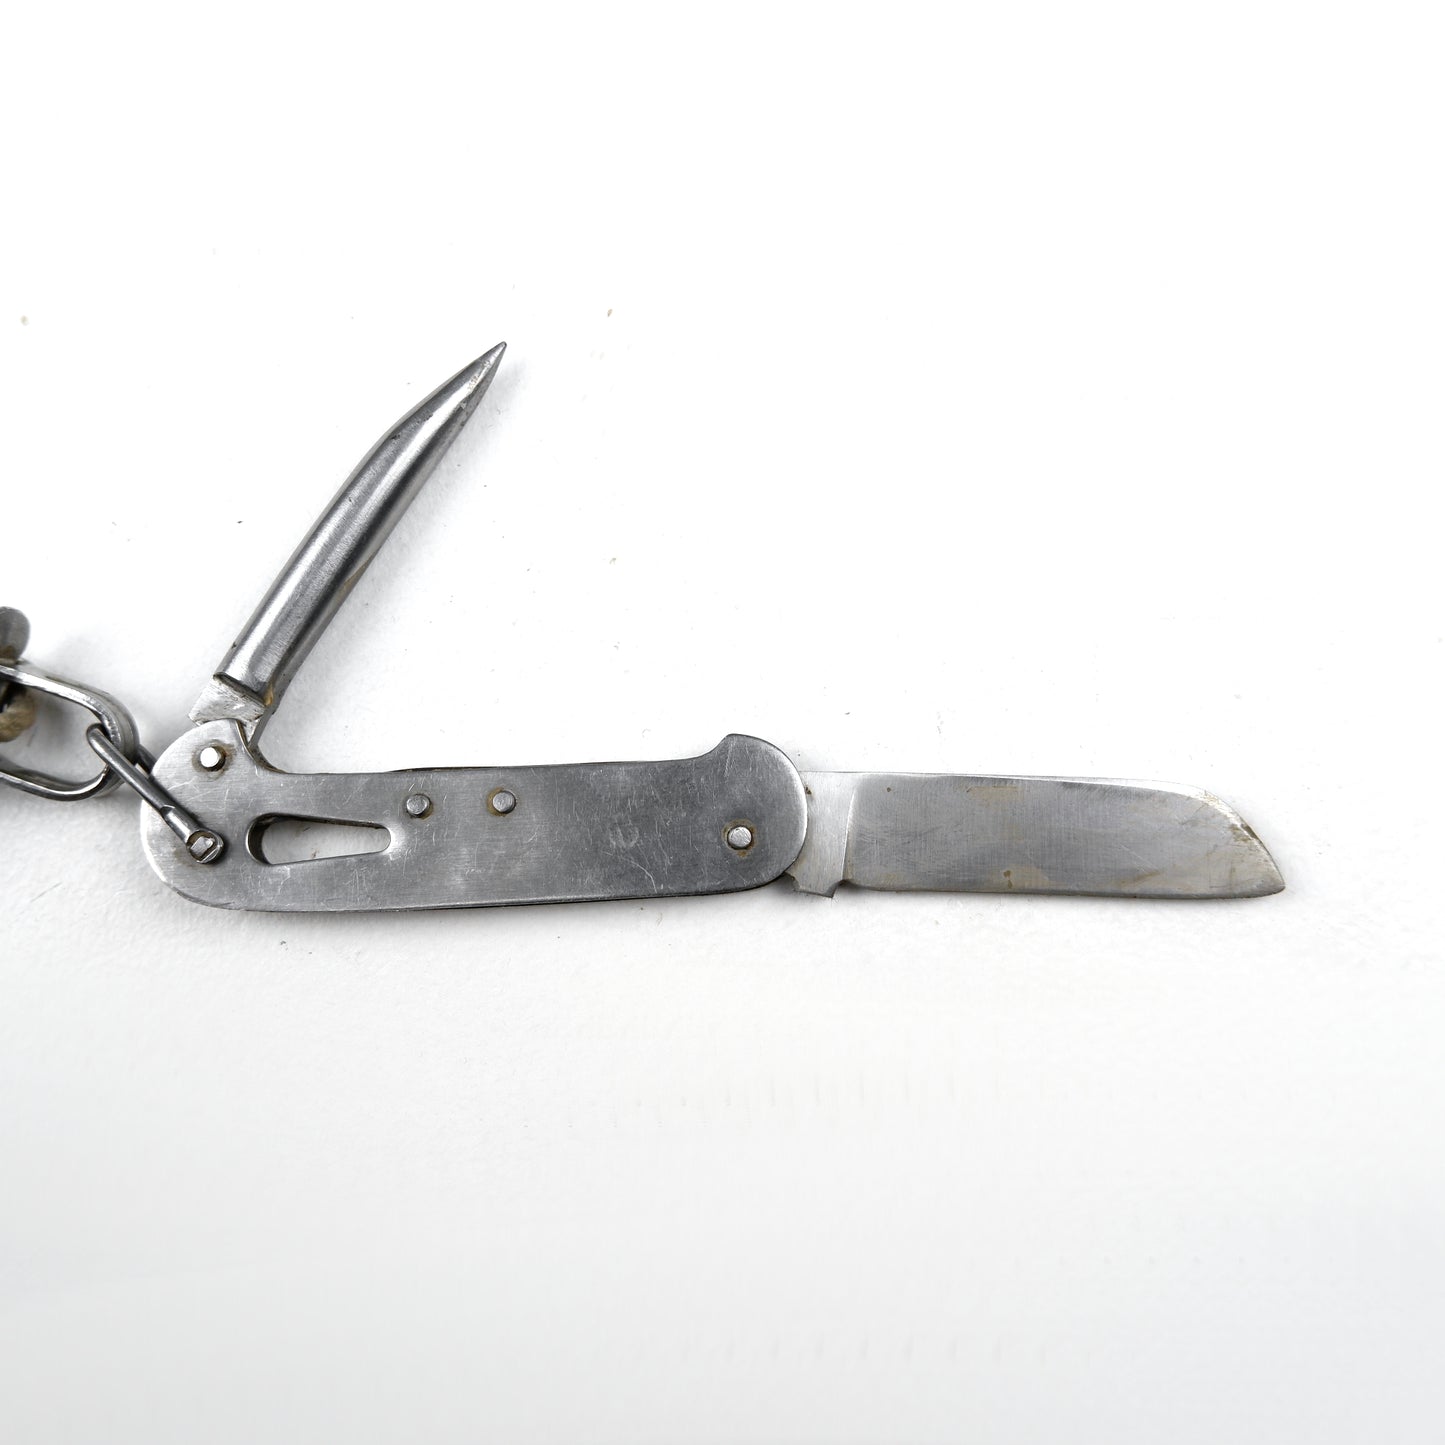 Currey Bosun Lockspike Yachtsmans Schooner Folding Knife, Stainless Steel - Chichester